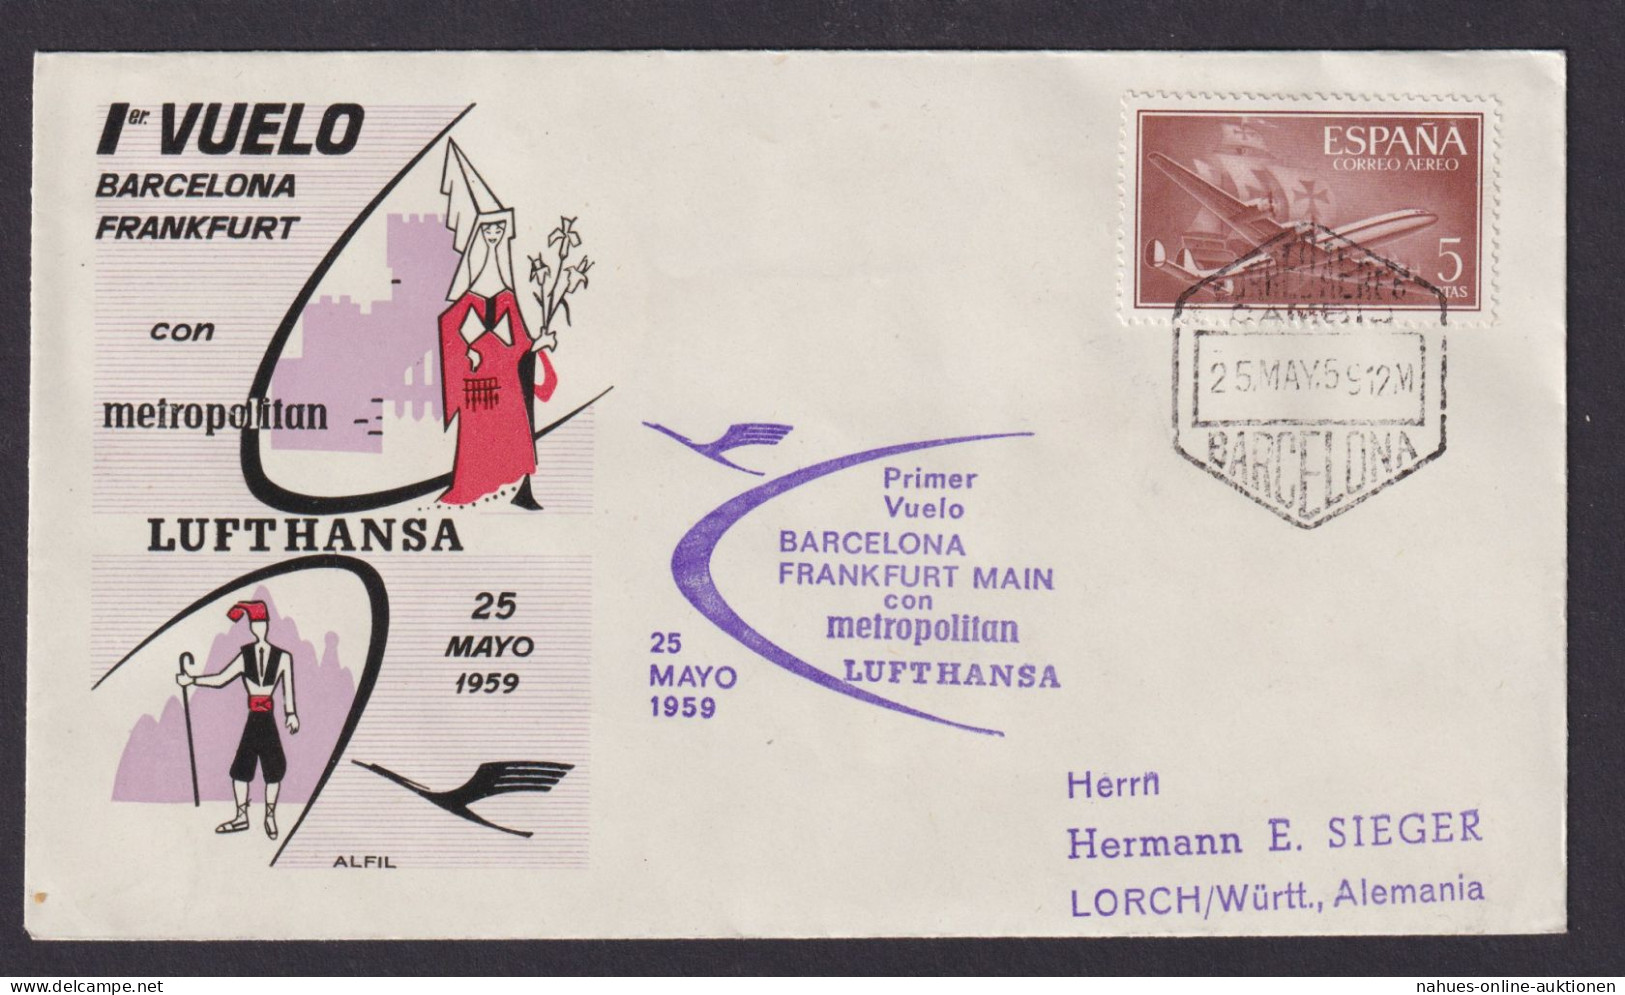 Flugpost Brief Air Mail Lufthansa Spanien Barcelona Frankfurt Toller Umschlag - Covers & Documents